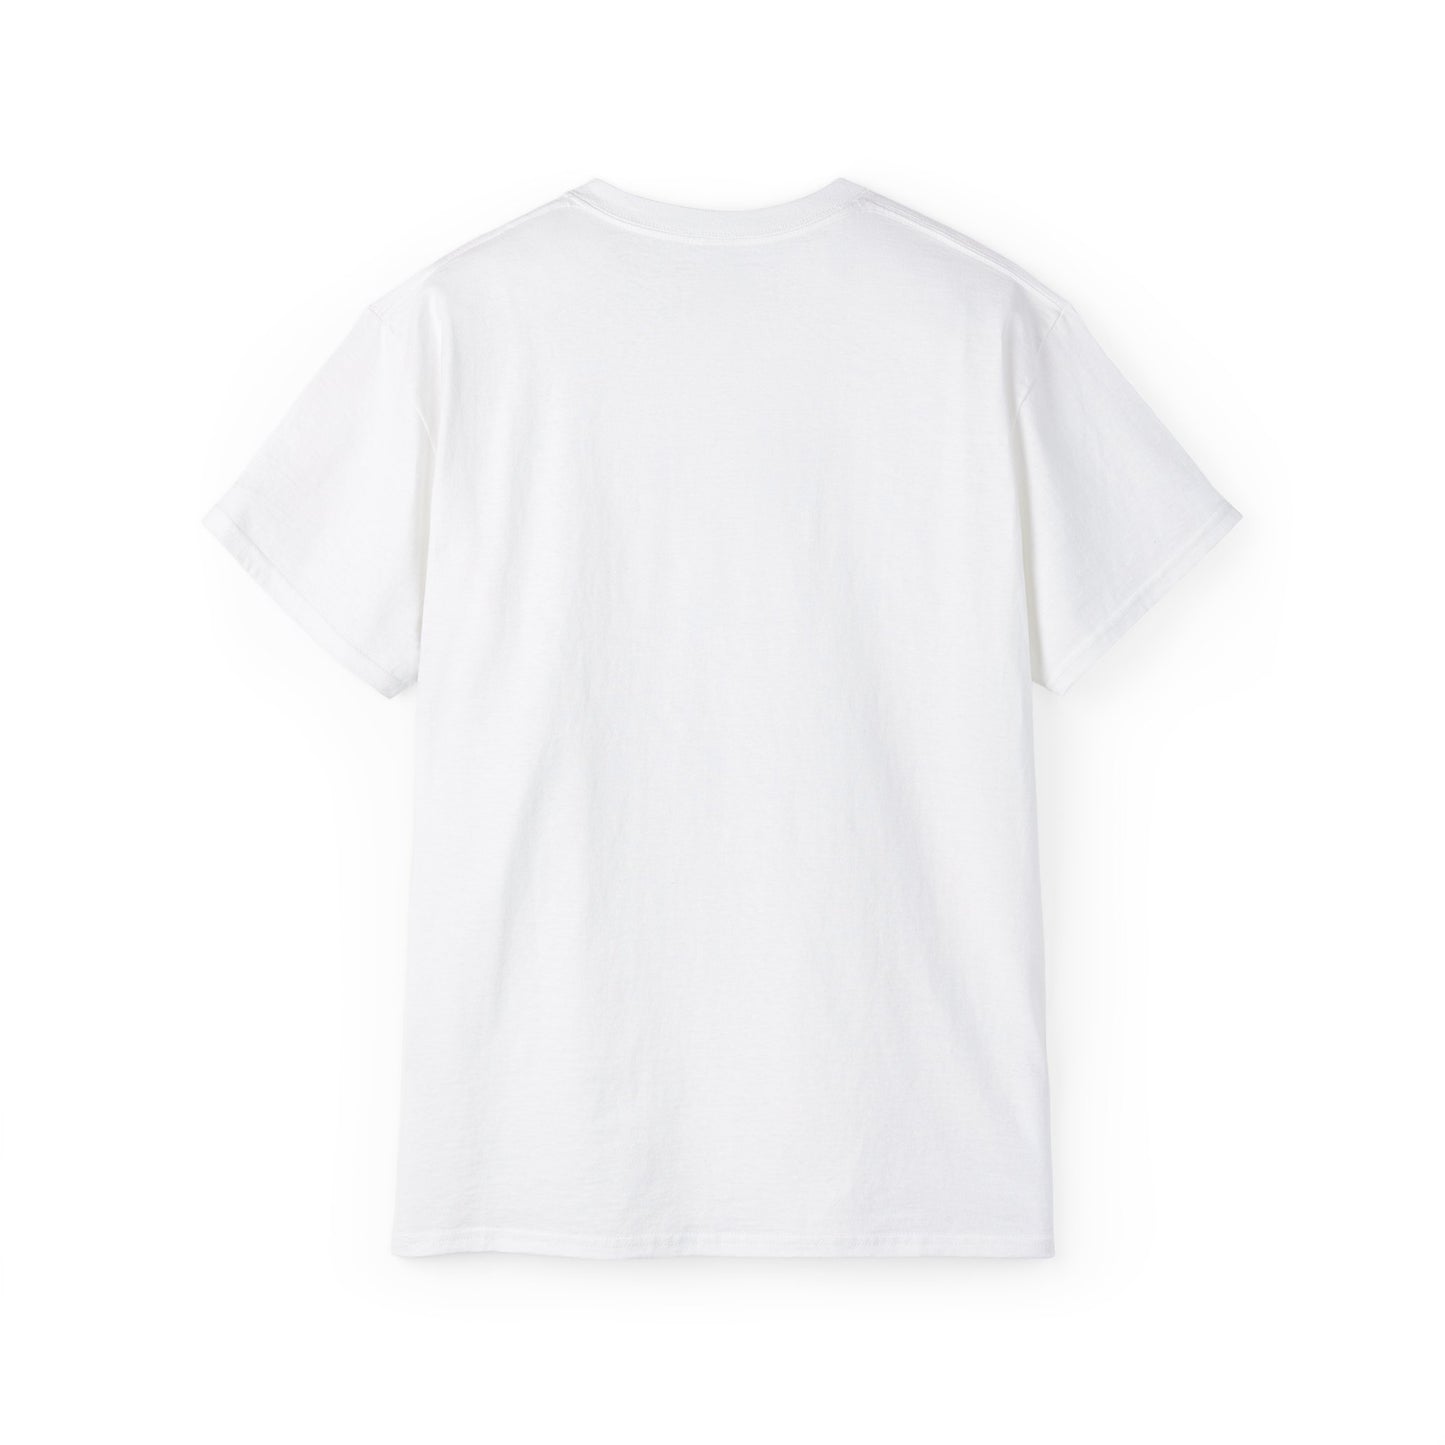 Timeless - Unisex T-Shirt